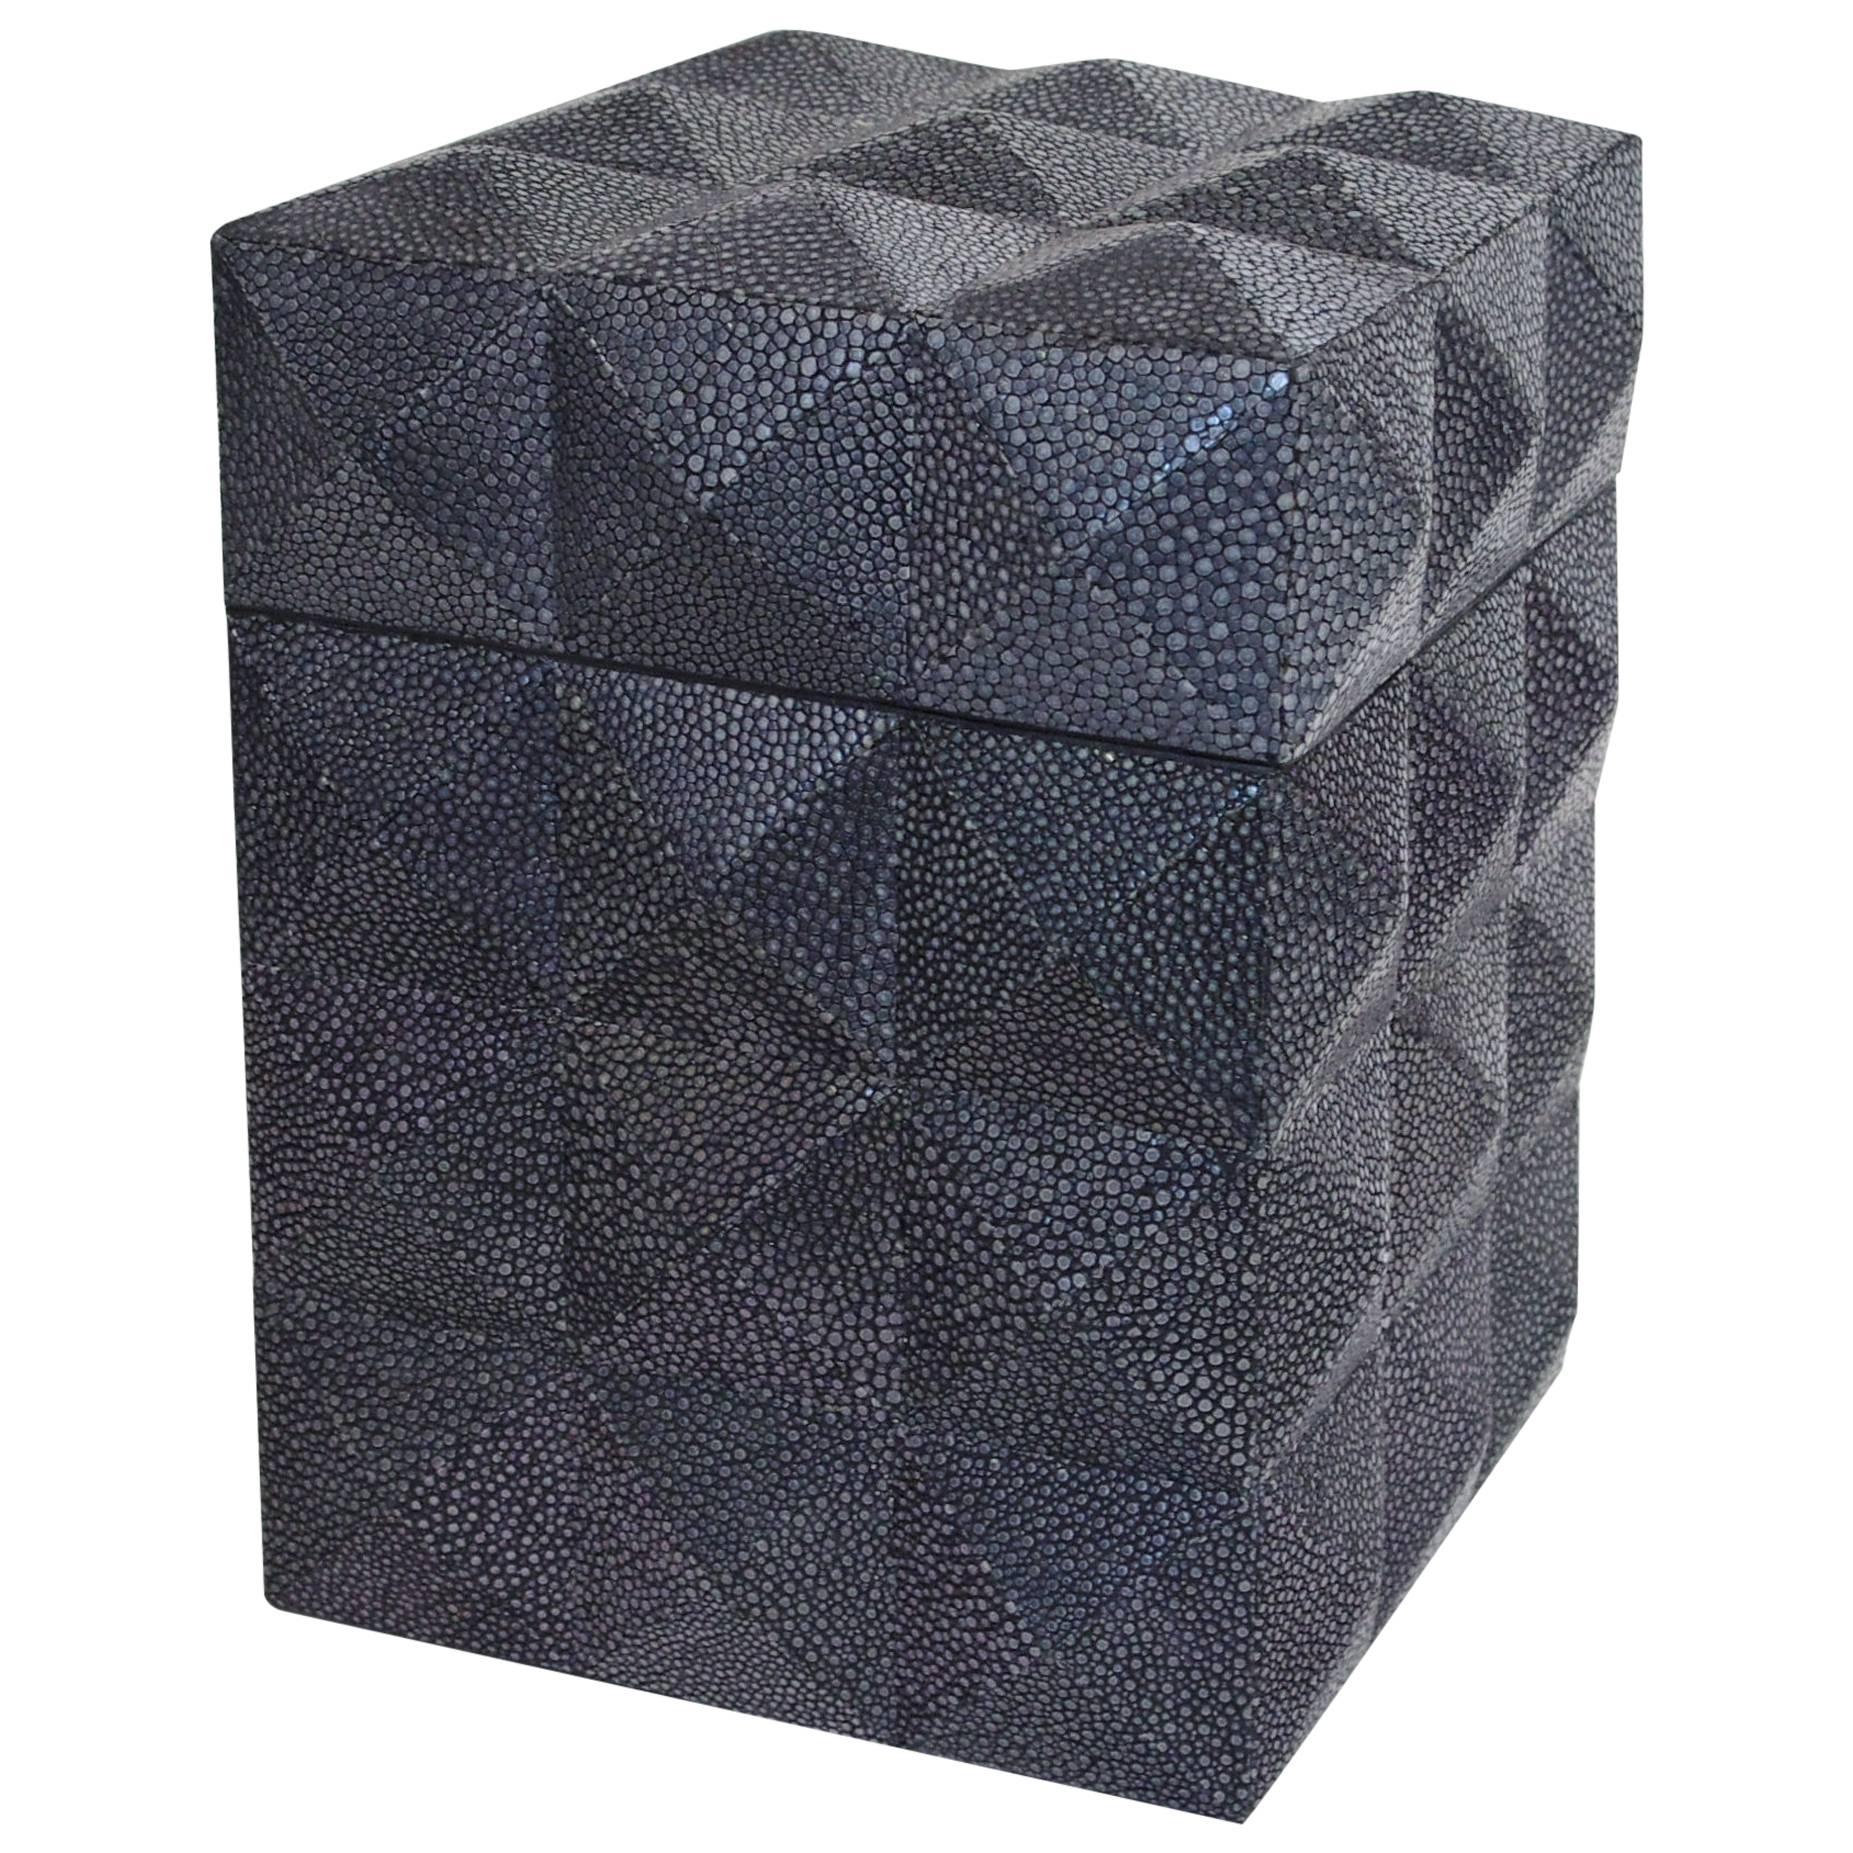 Pyramid Black Shagreen Box by Fabio Ltd